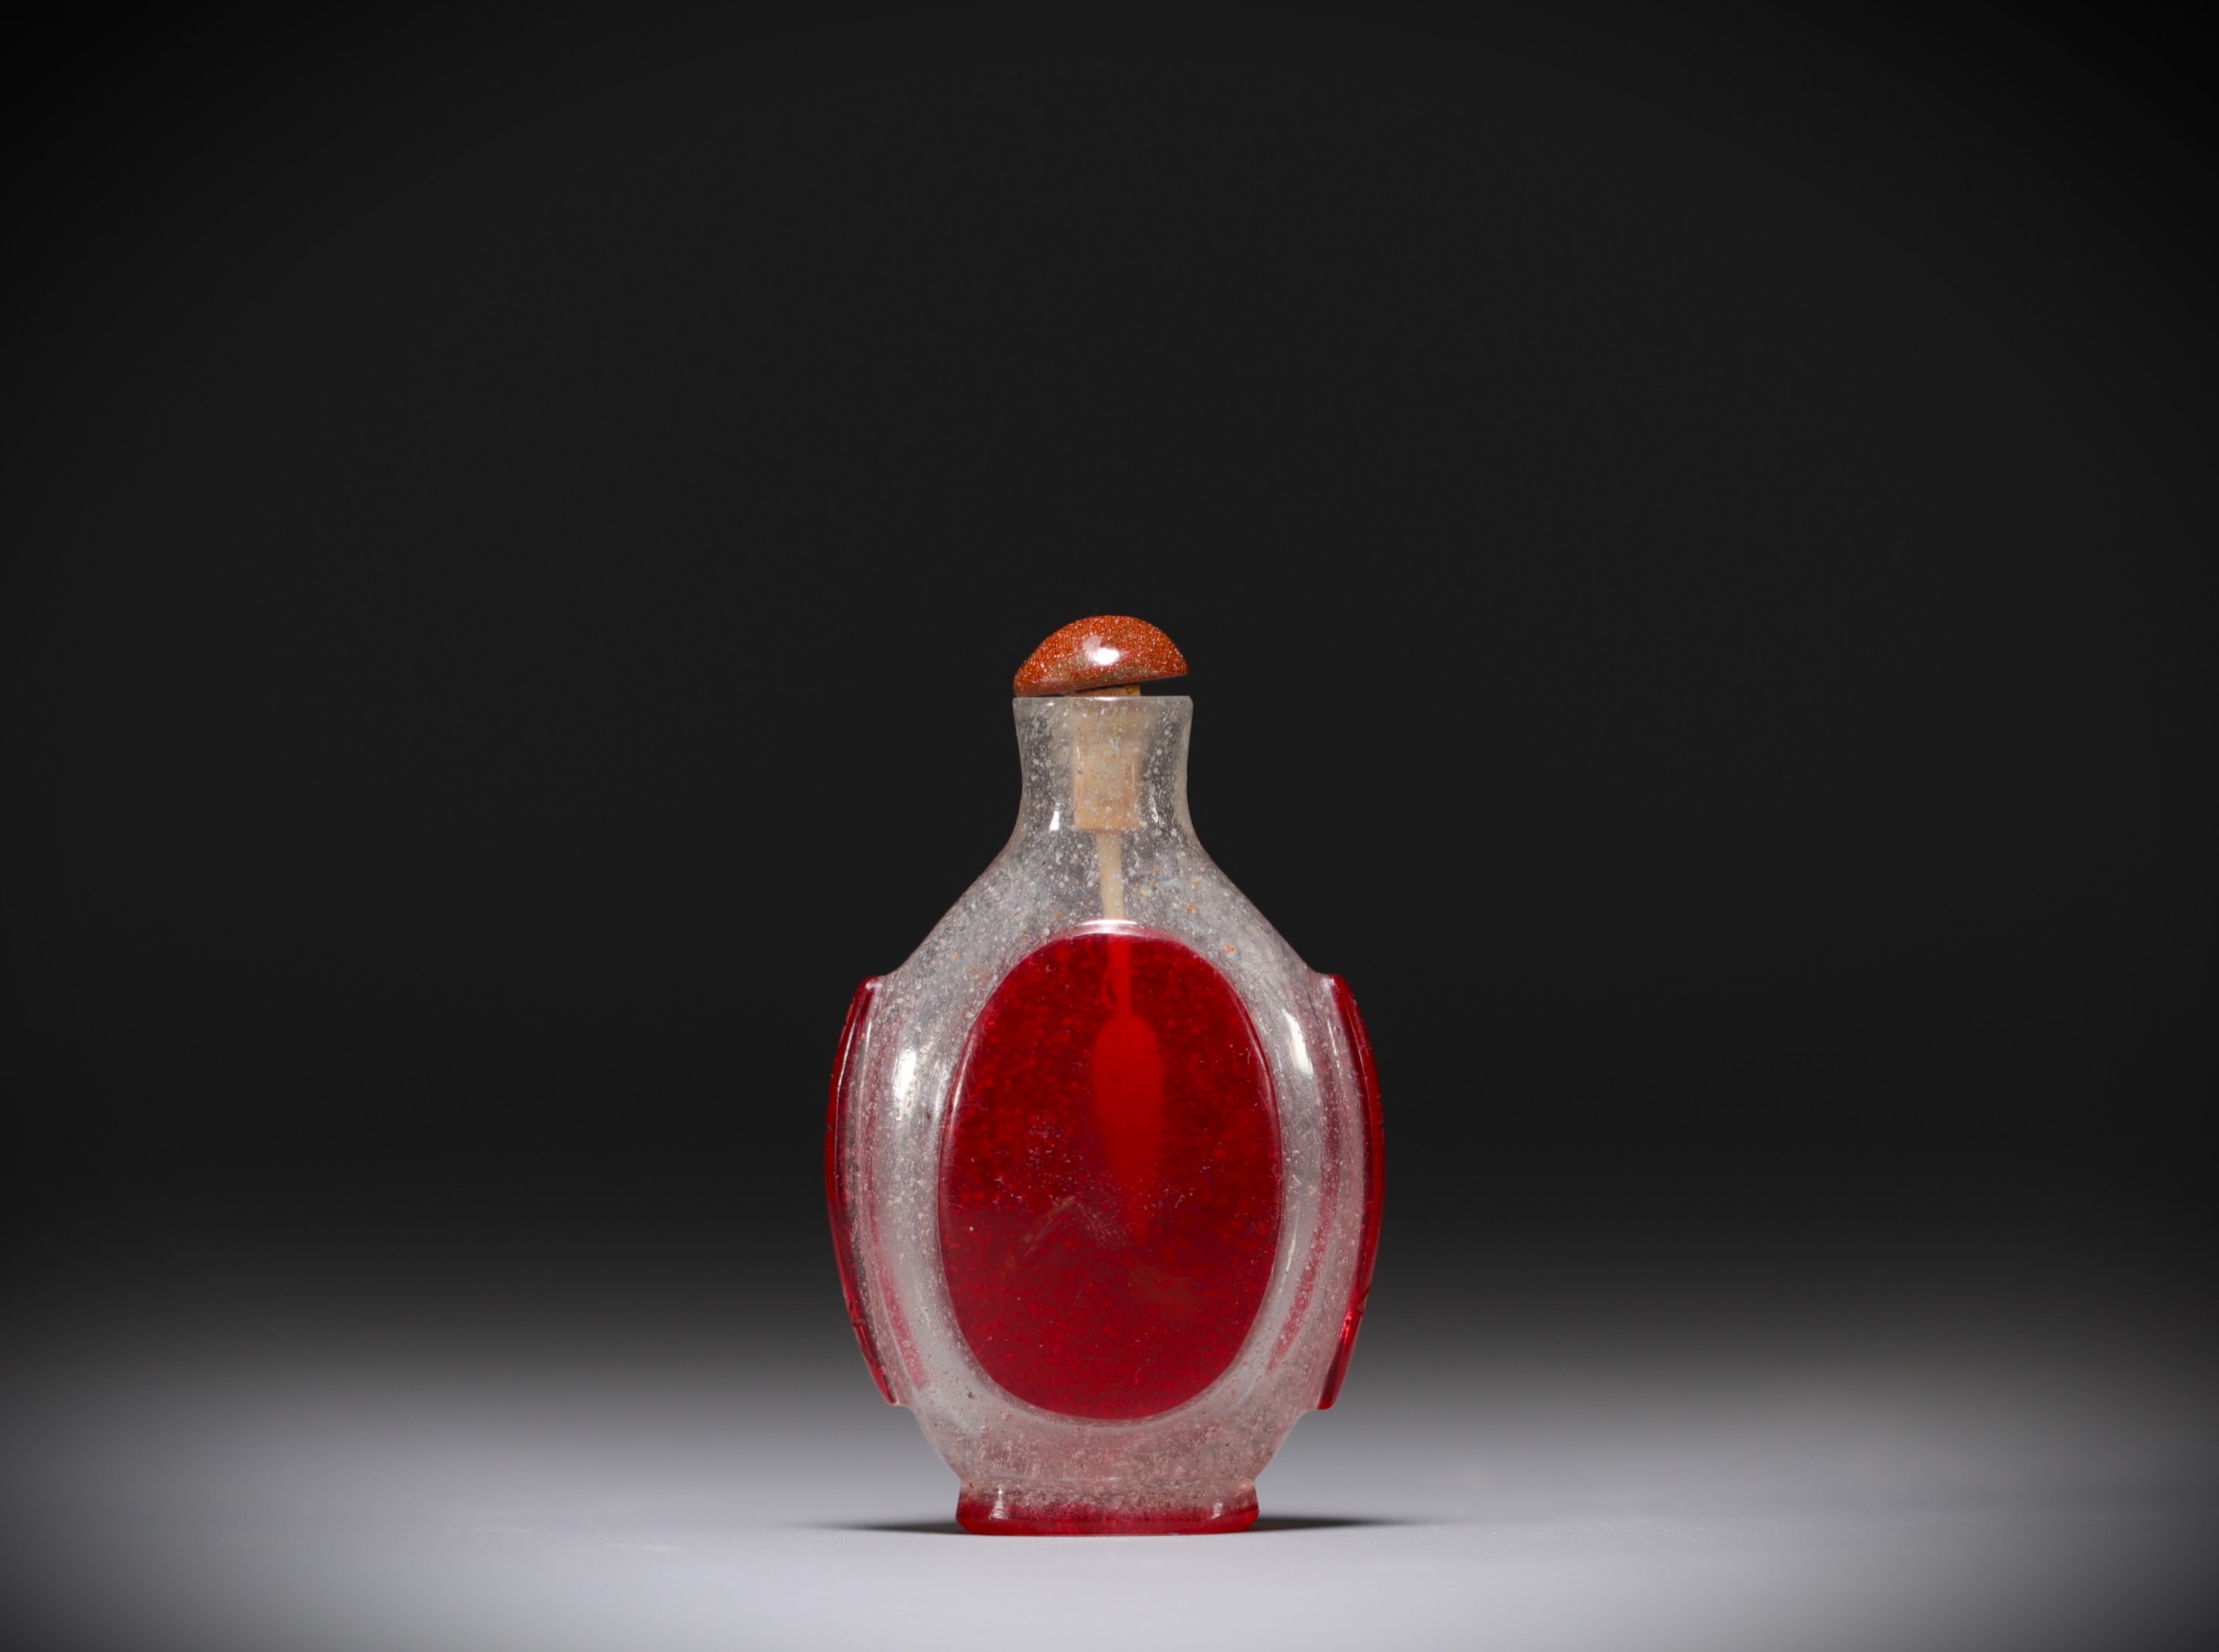 China - Red multi-layered glass snuffbox. - Image 3 of 4